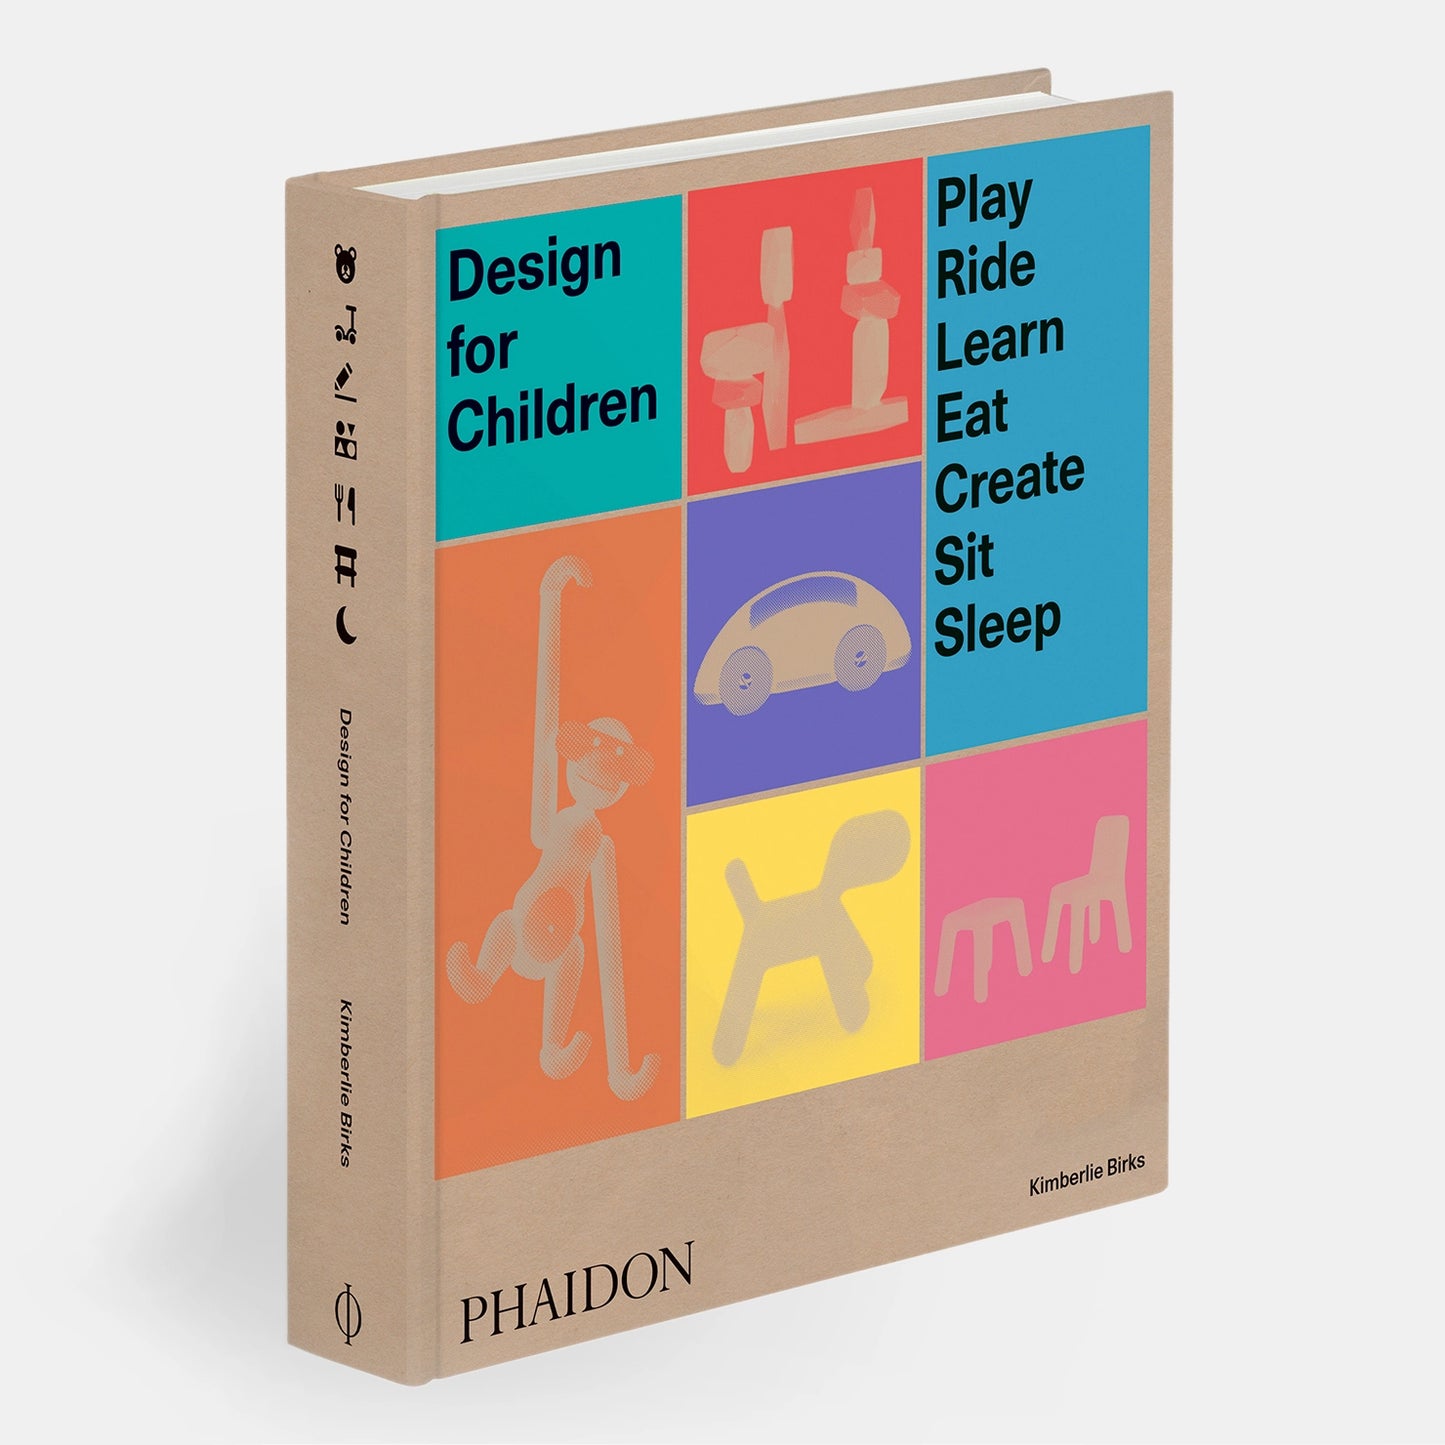 Design for children: play, ride, learn, eat, create, sit, sleep